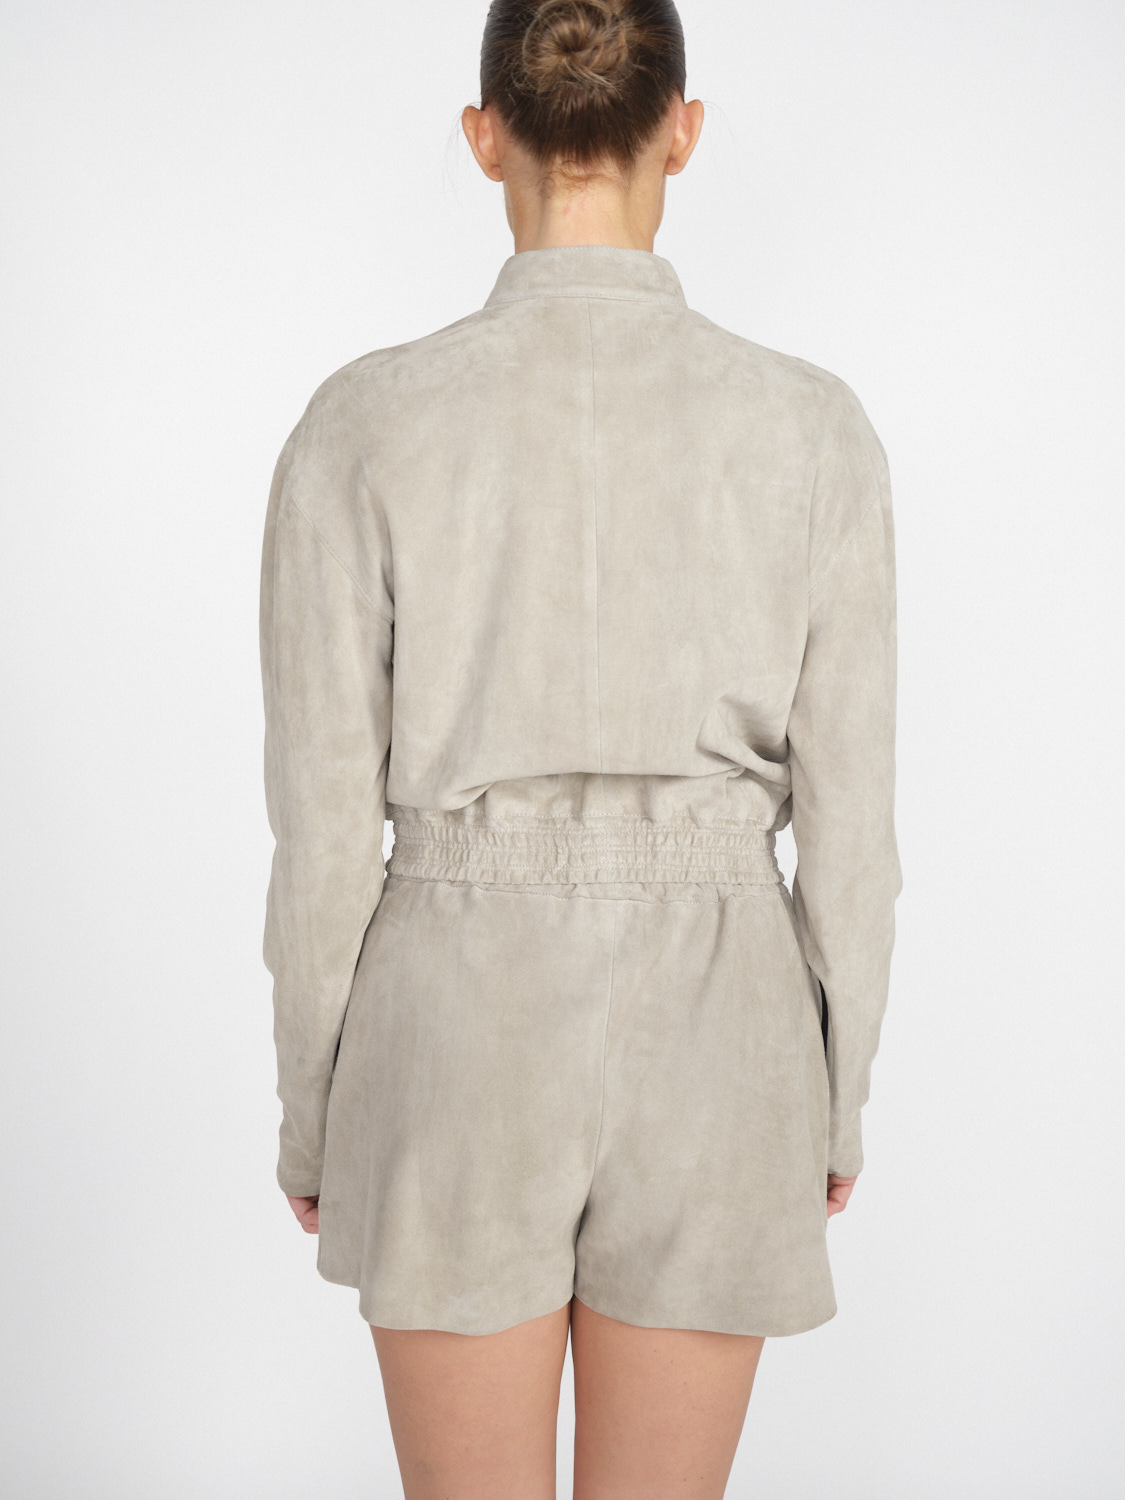 jitrois Blof – Stretchige Veloursleder-Jacke mit schwarzen Zippern  beige 34